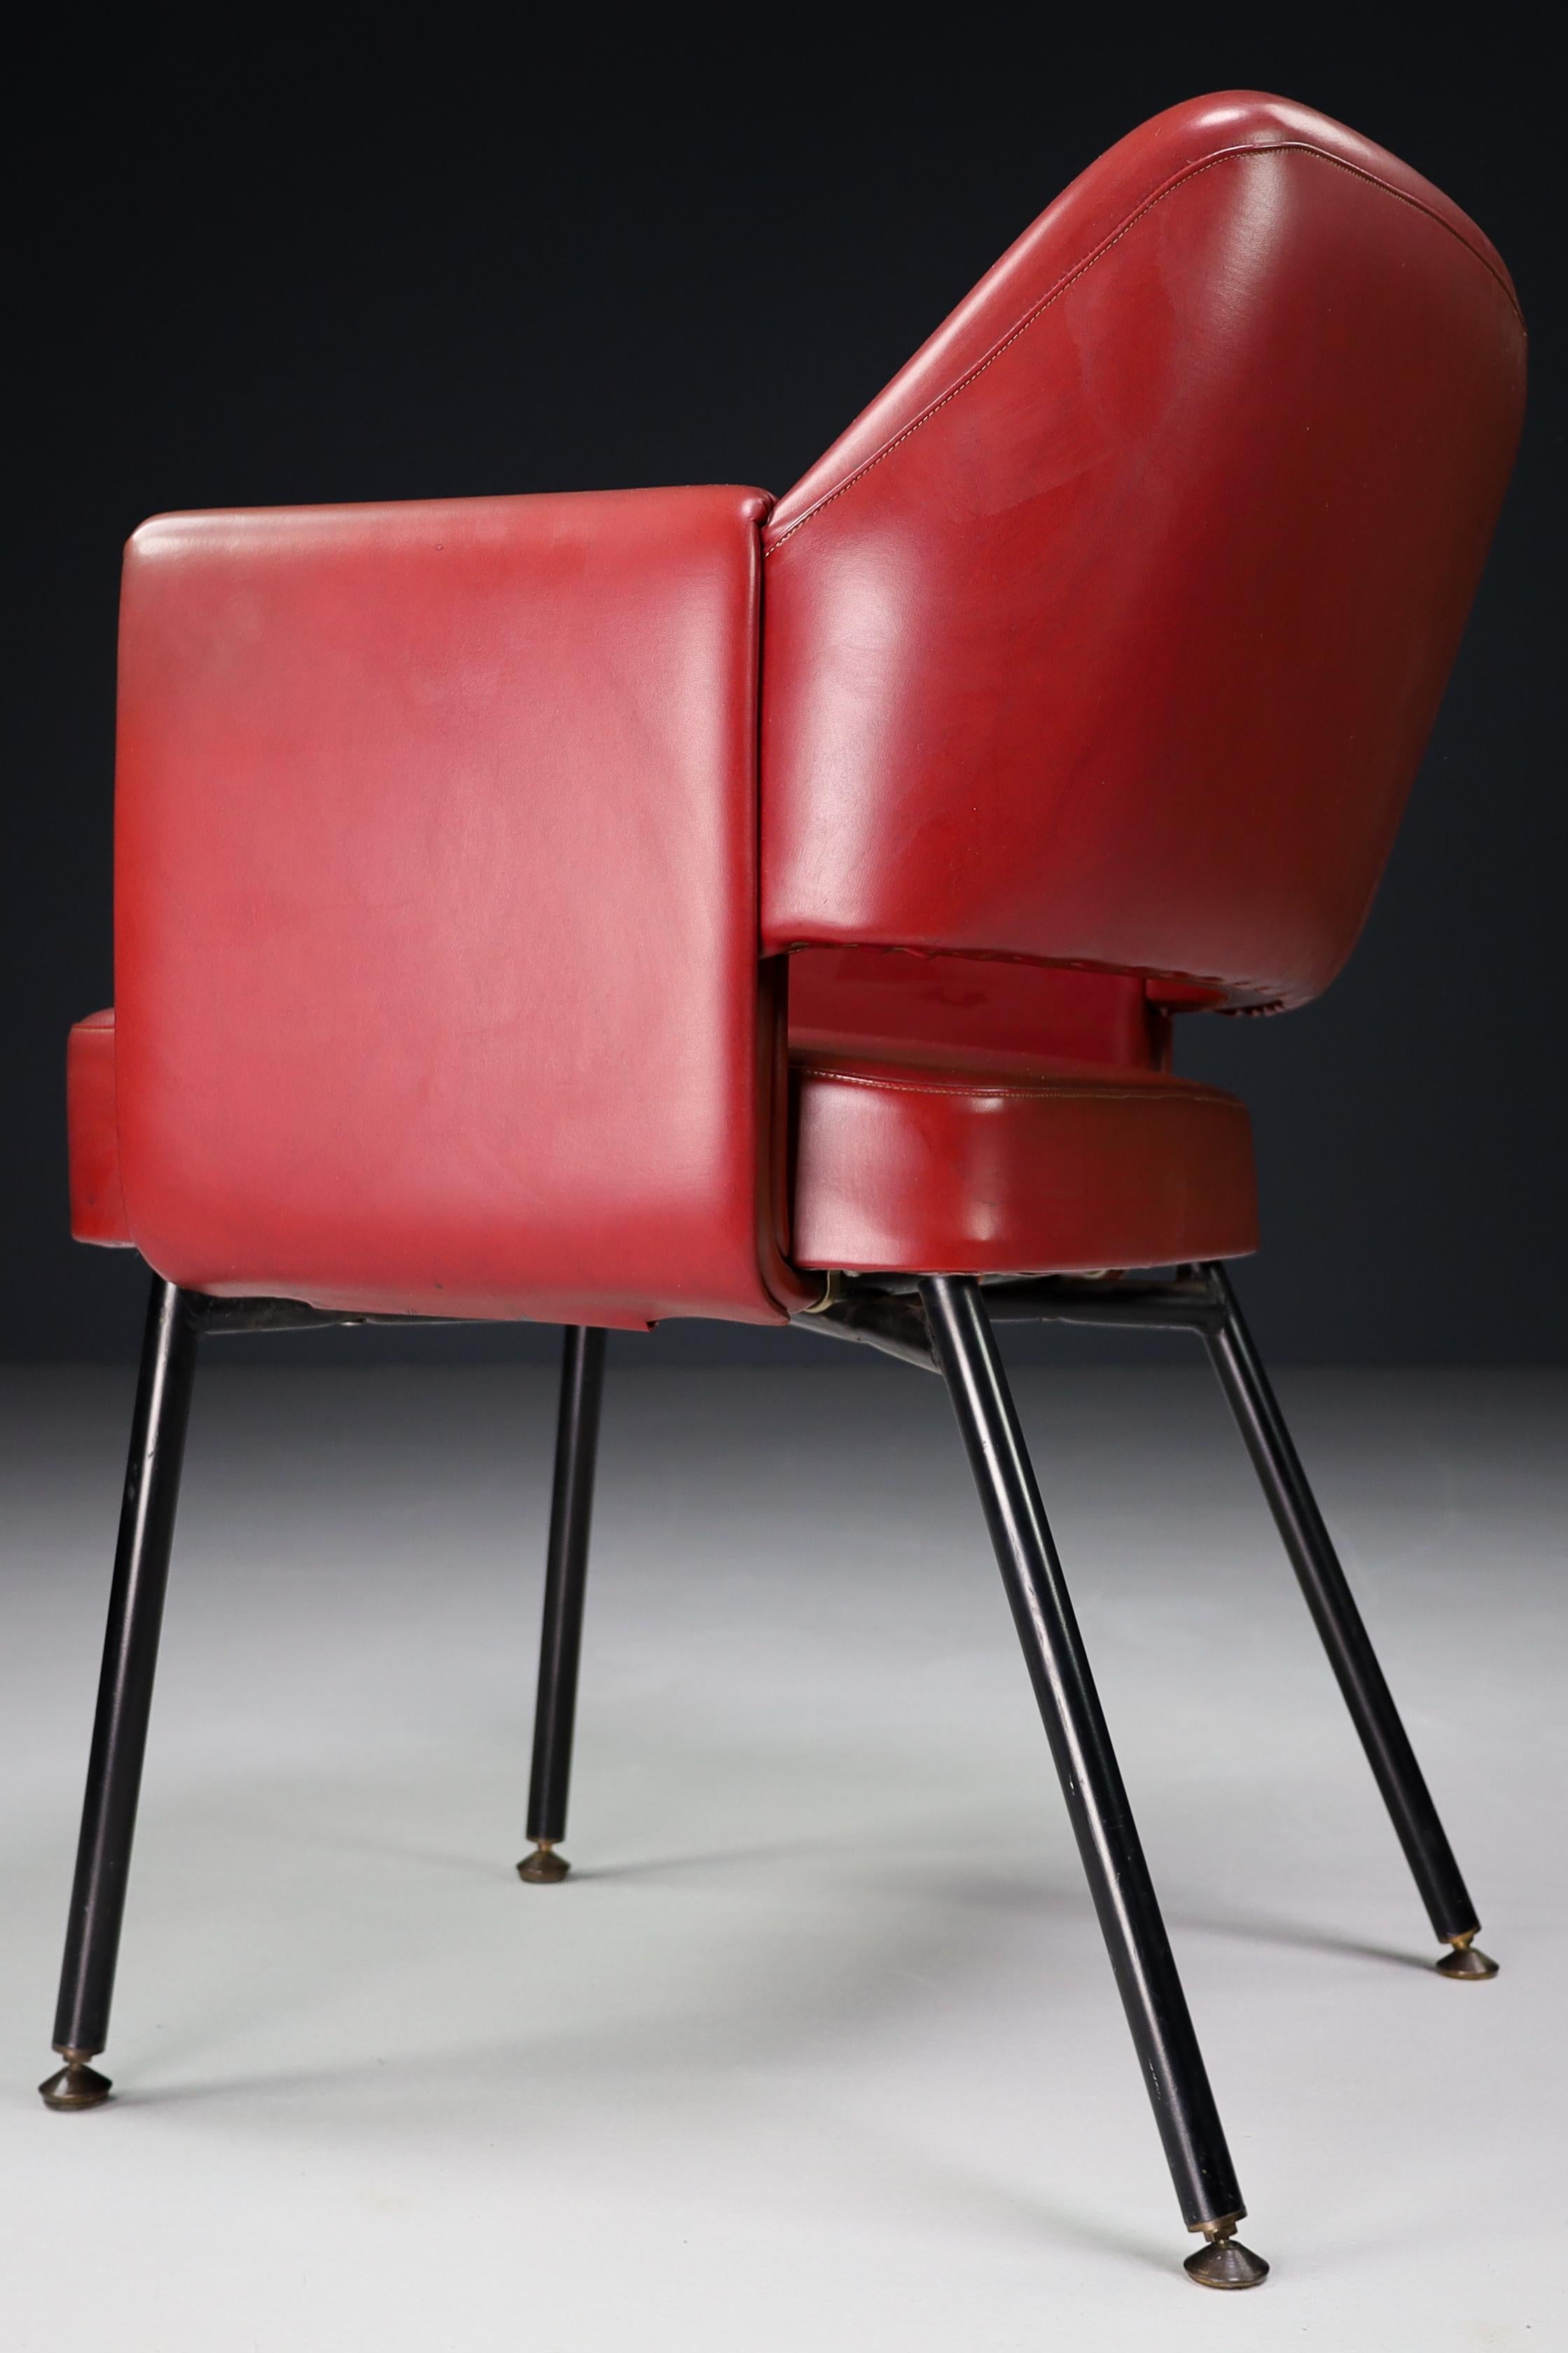 20th Century Midcentury Chair Model 